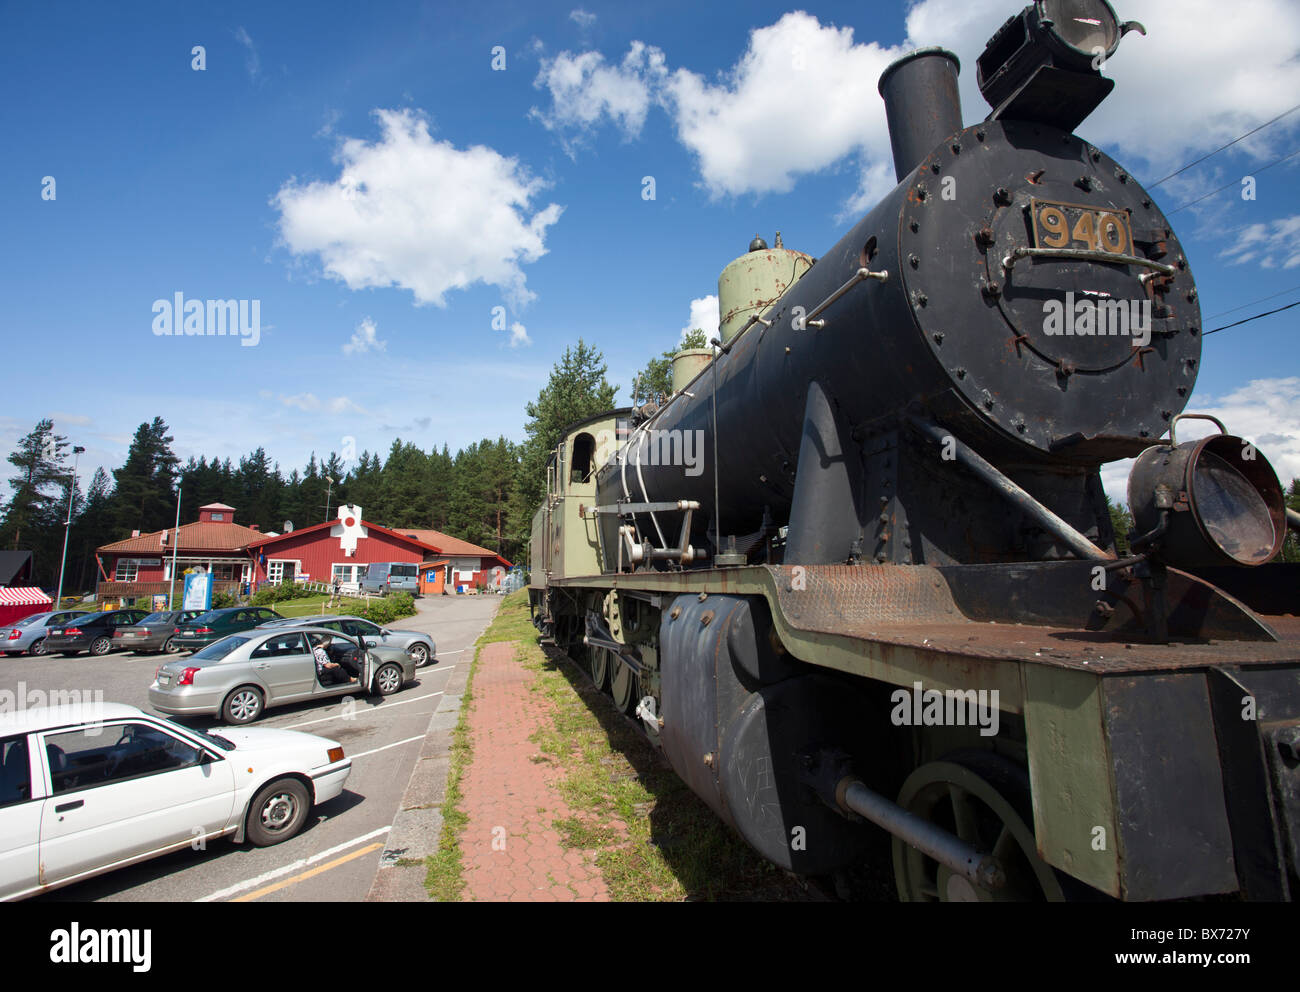 Matin ja Liisan asema highway cafe ' s symbol old steam locomotive  Lapinlahti , Finland Stock Photo - Alamy